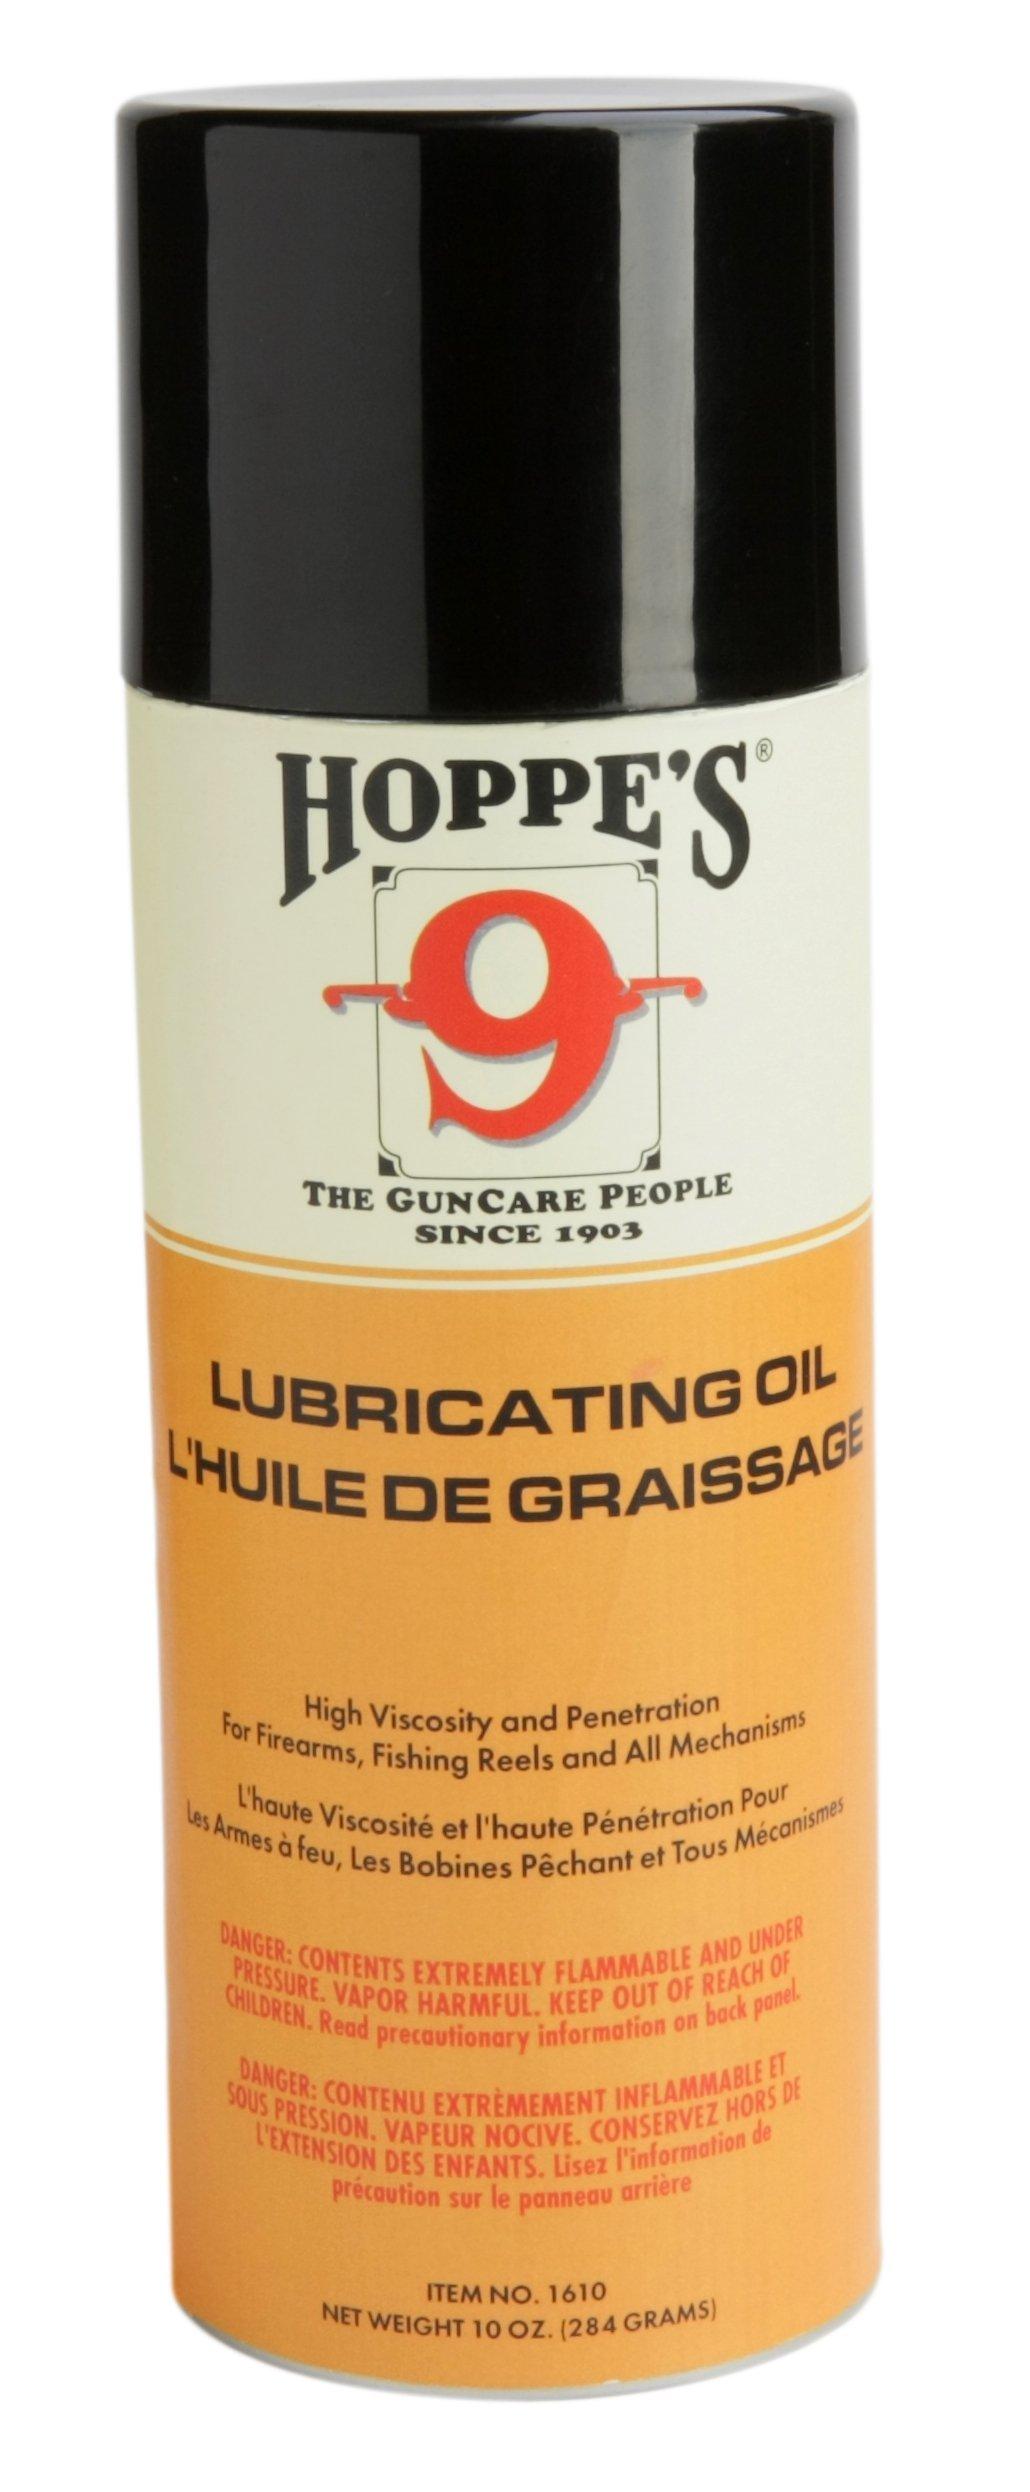 No. 9 Lubricating Oil, 2-1/4 oz. Bottle